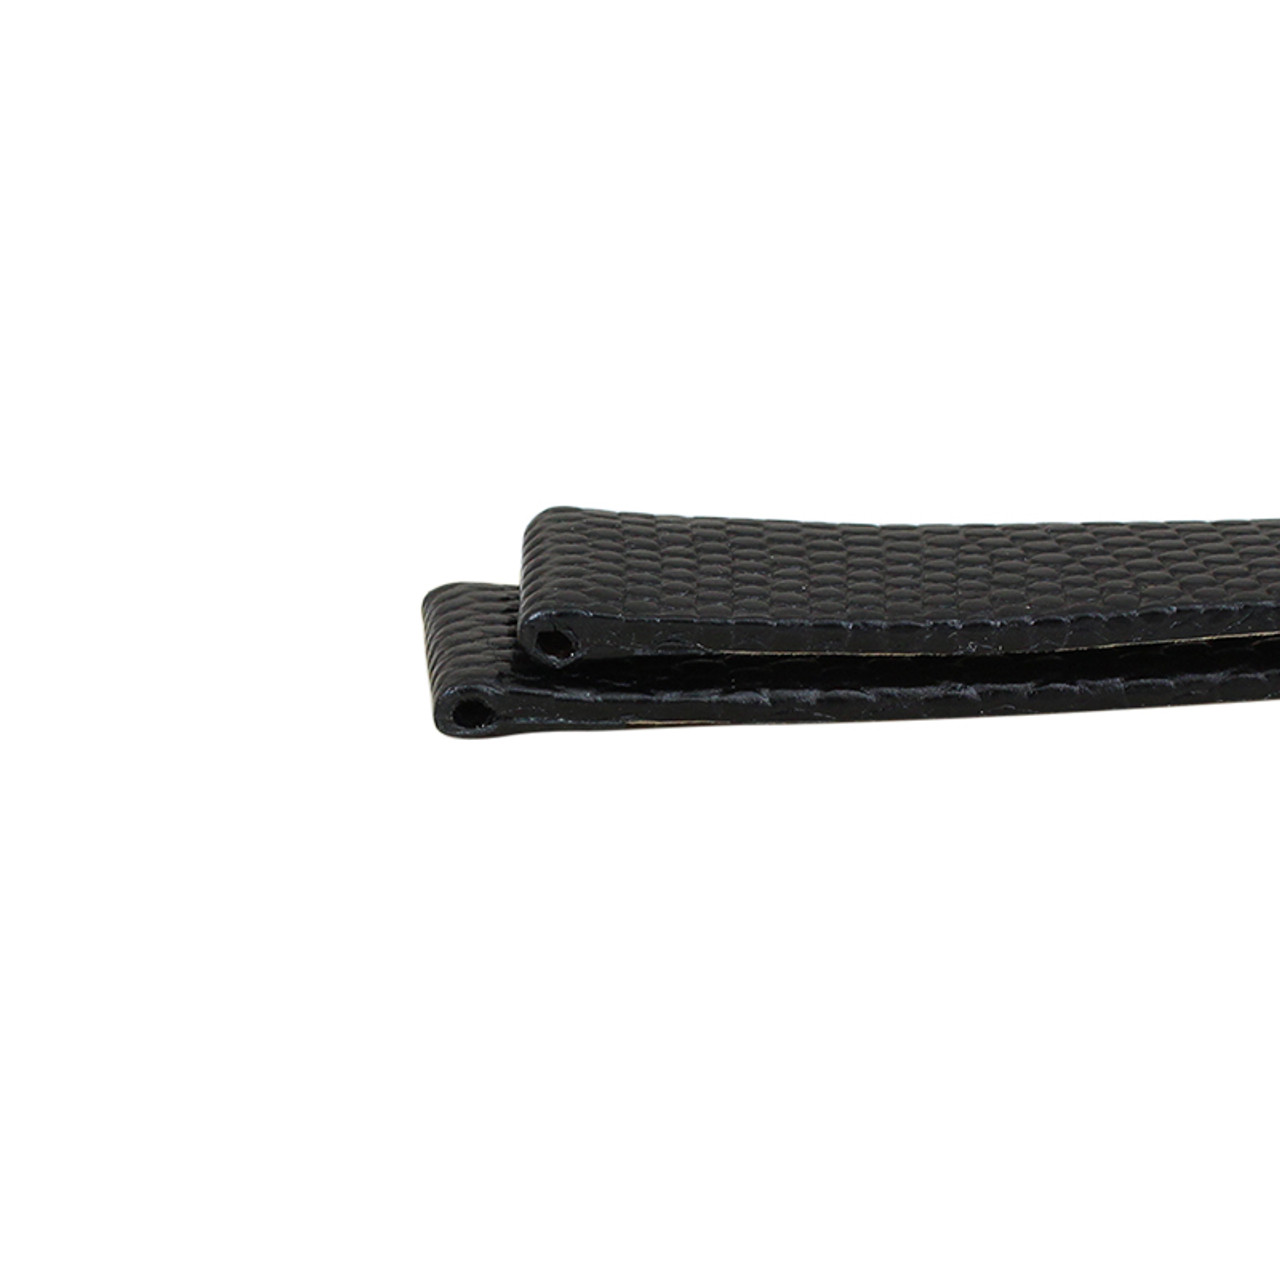 18mm Long Lizard Grain Black Leather Watch Band 8 1/4 Inch Length